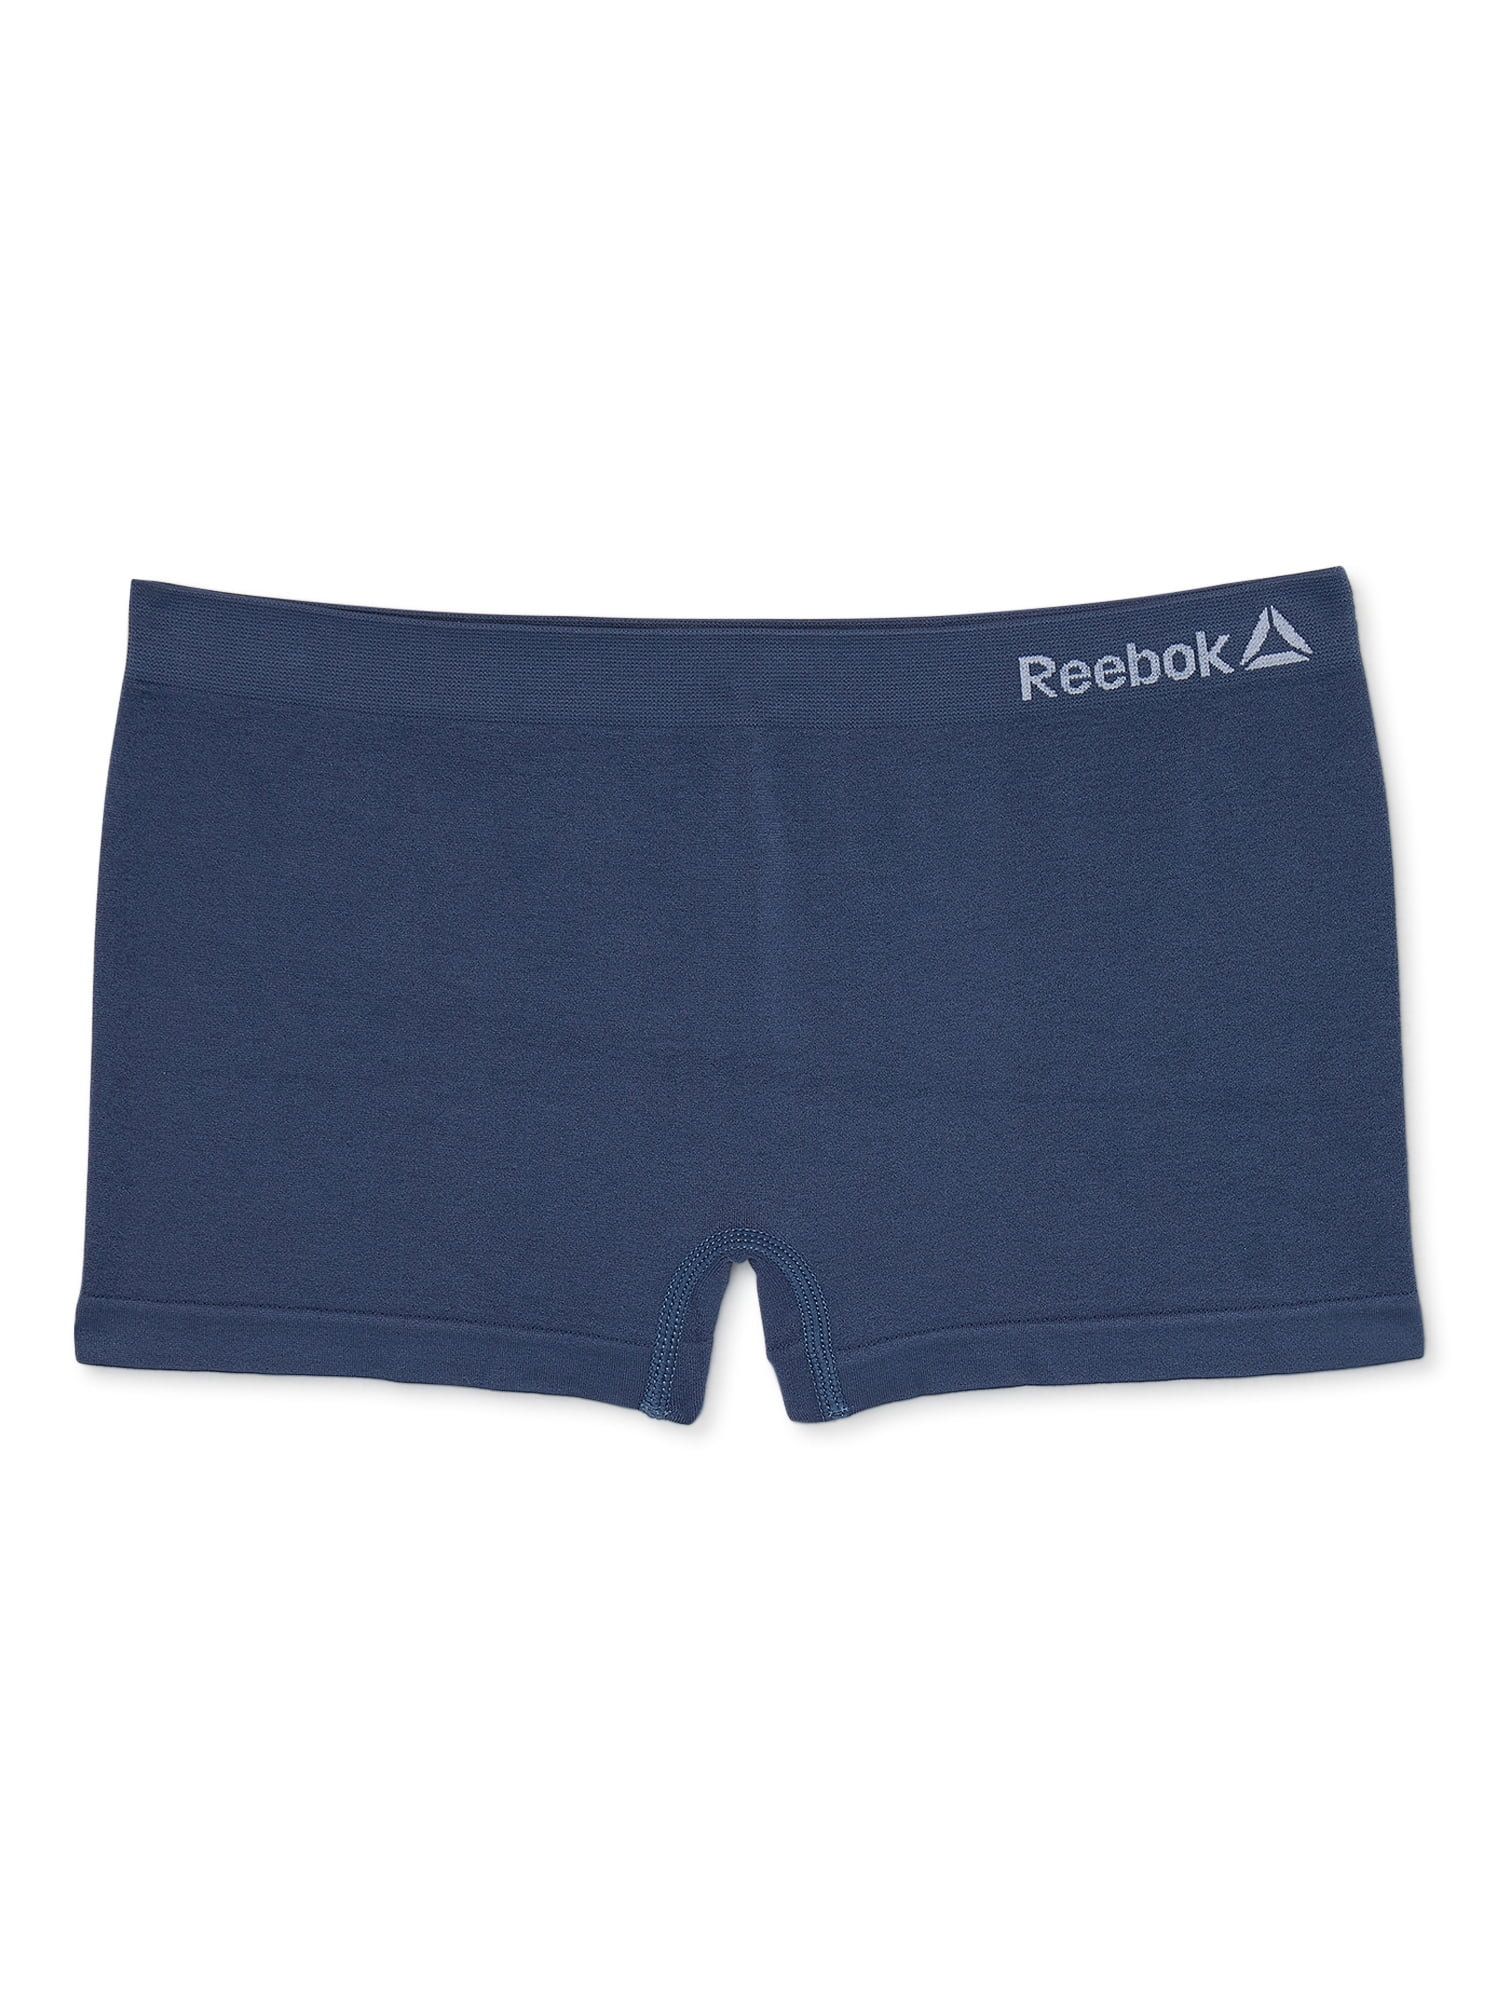 Reebok Girls' Underwear - Seamless Boyshort Panties (10 Pack), Size Medium,  Evening Blue/Sharkskin/White Stripes/Dusty Blue/Violet Blue